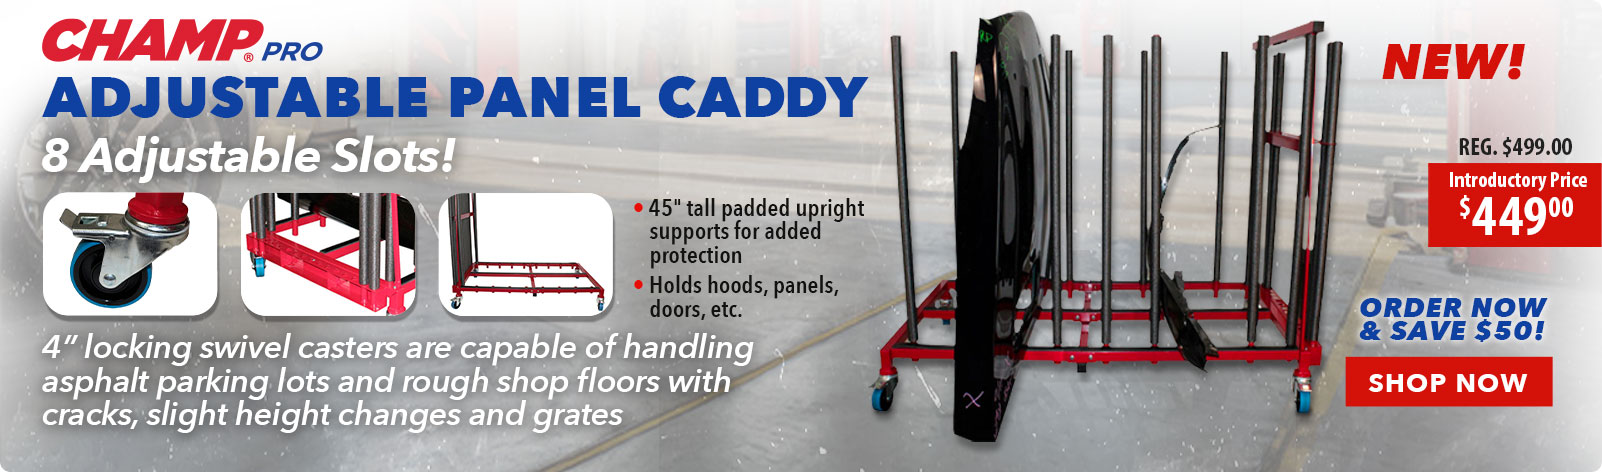 New! Champ Pro Adjustable Panel Caddy